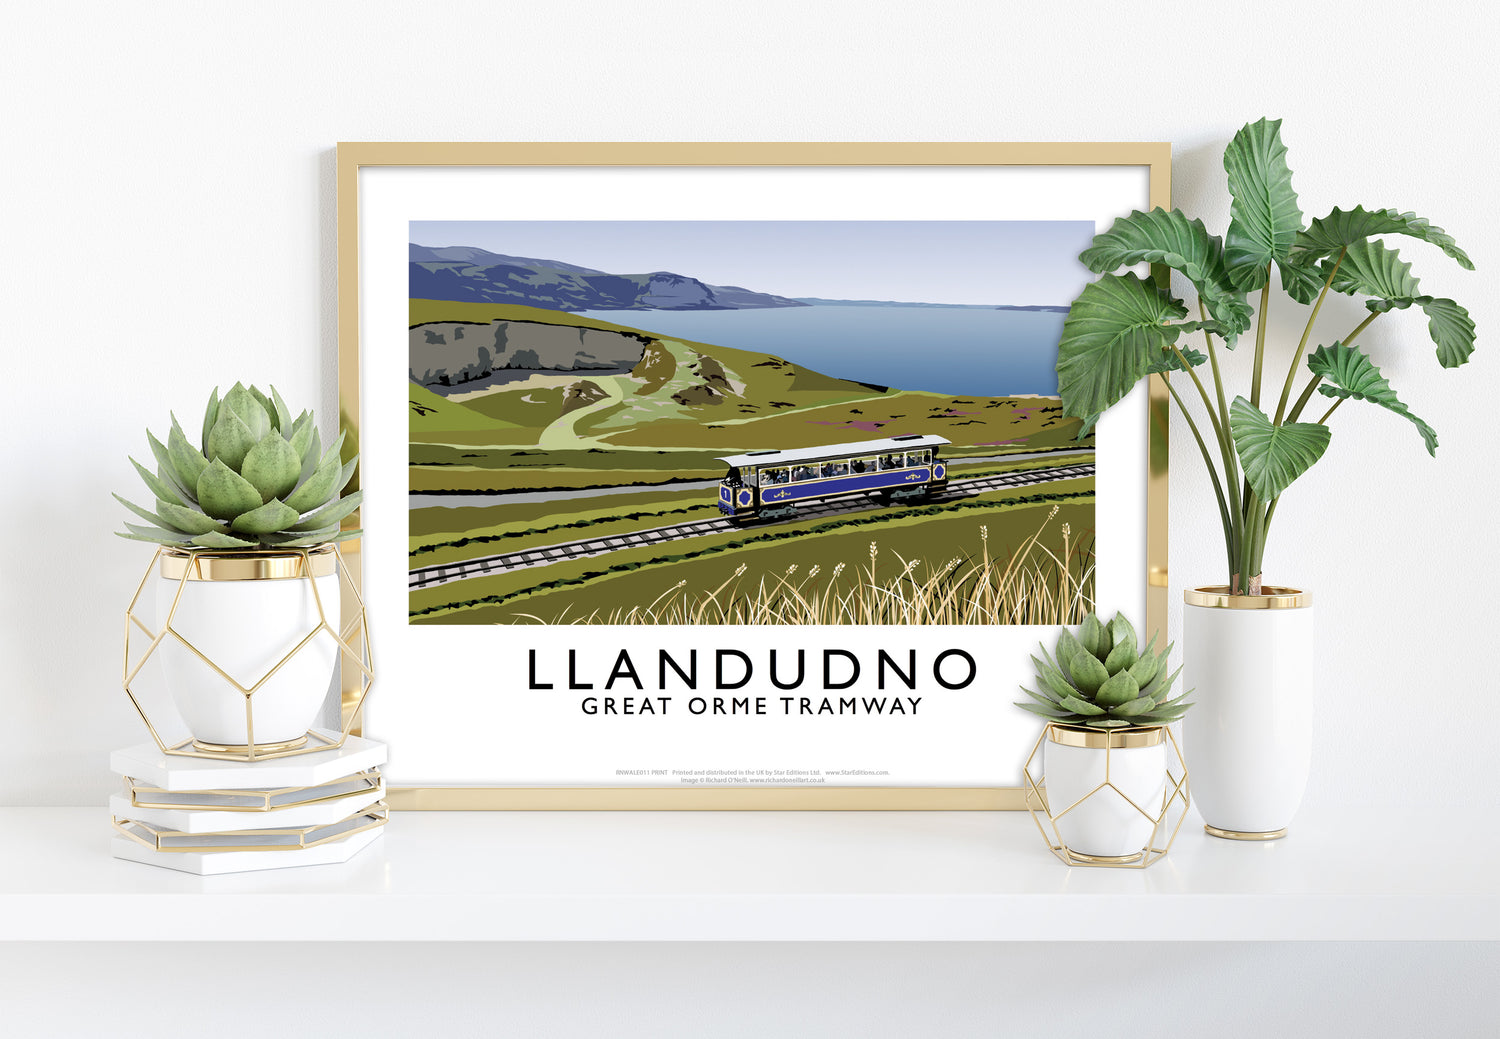 Llandudno, Great Orme Tramway, Wales - Art Print